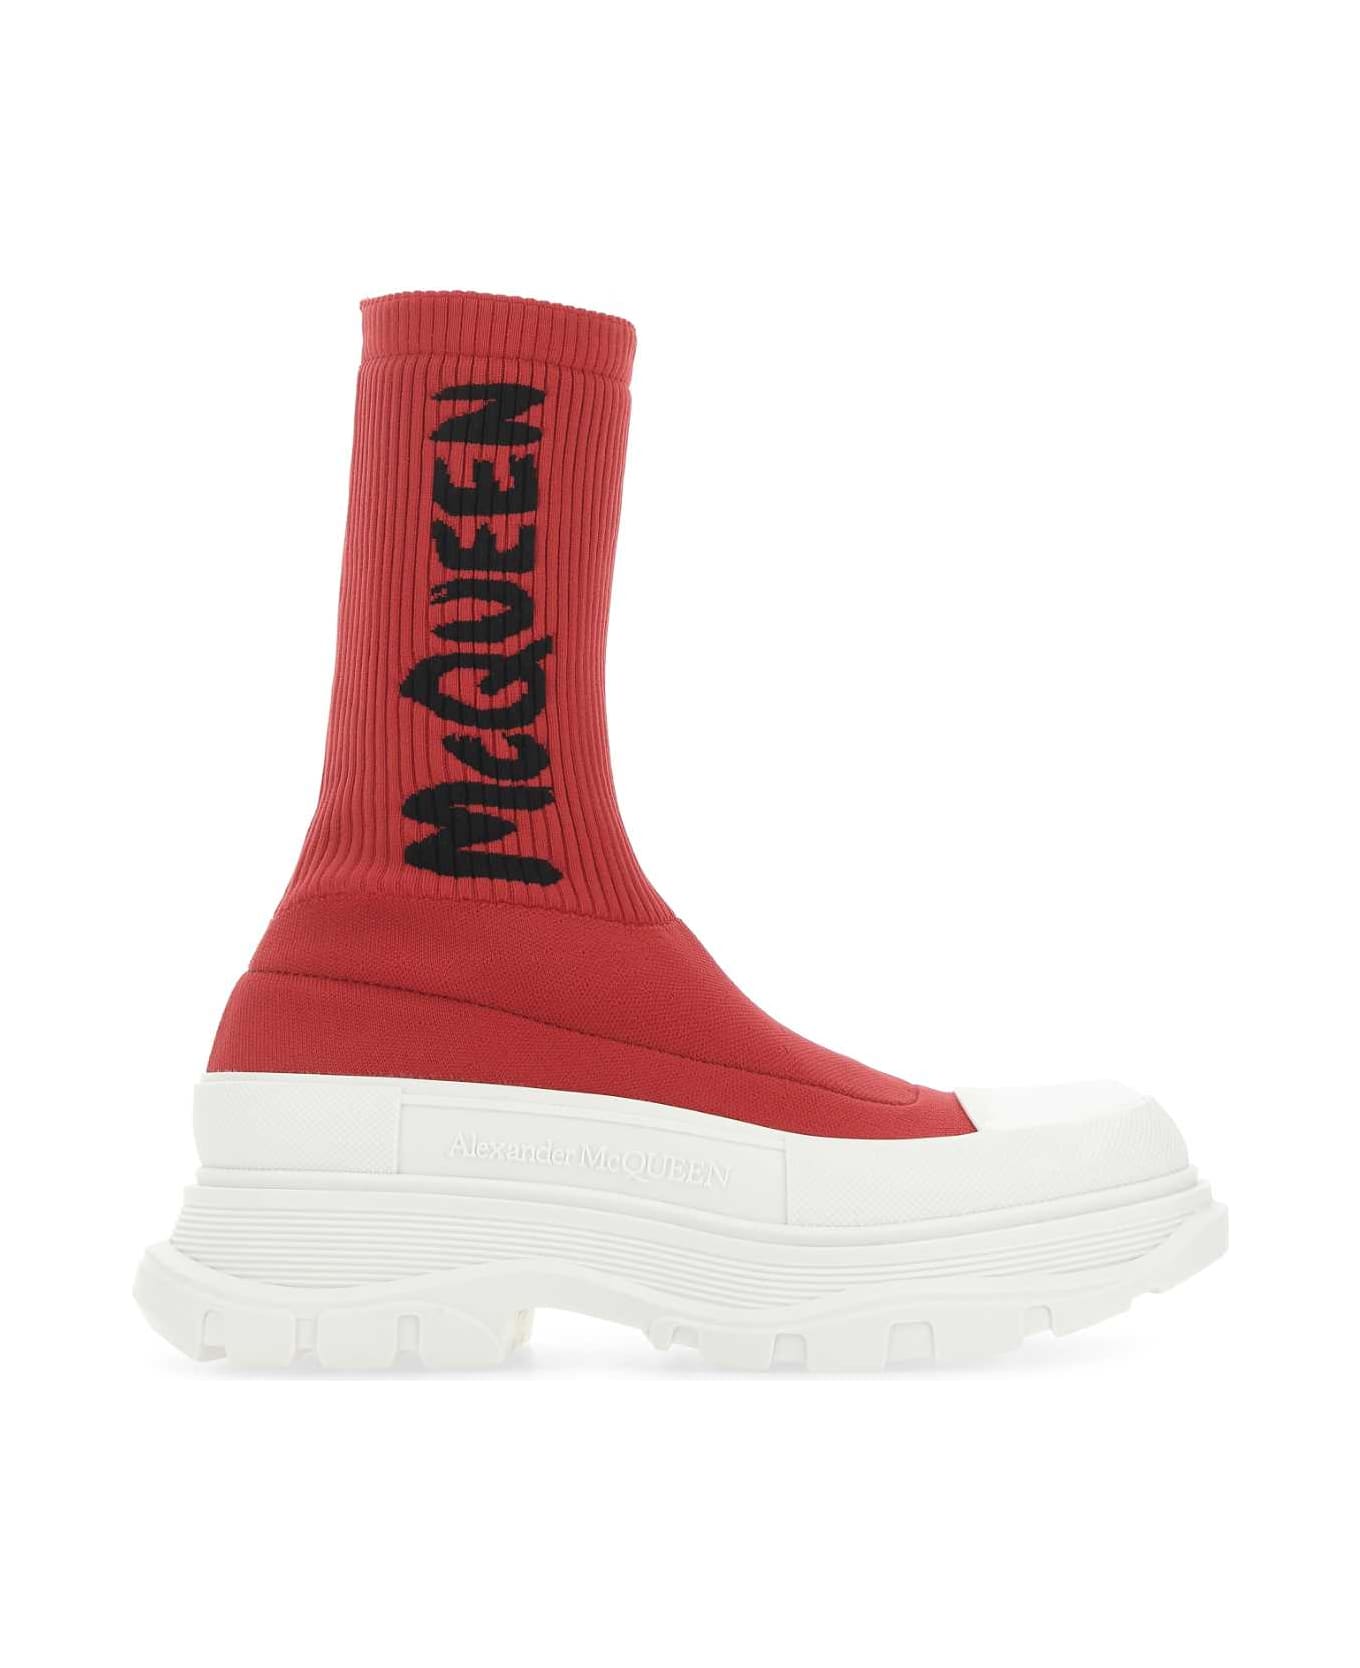 Alexander McQueen Red Stretch Nylon Tread Slick Sneakers - 5535 スニーカー